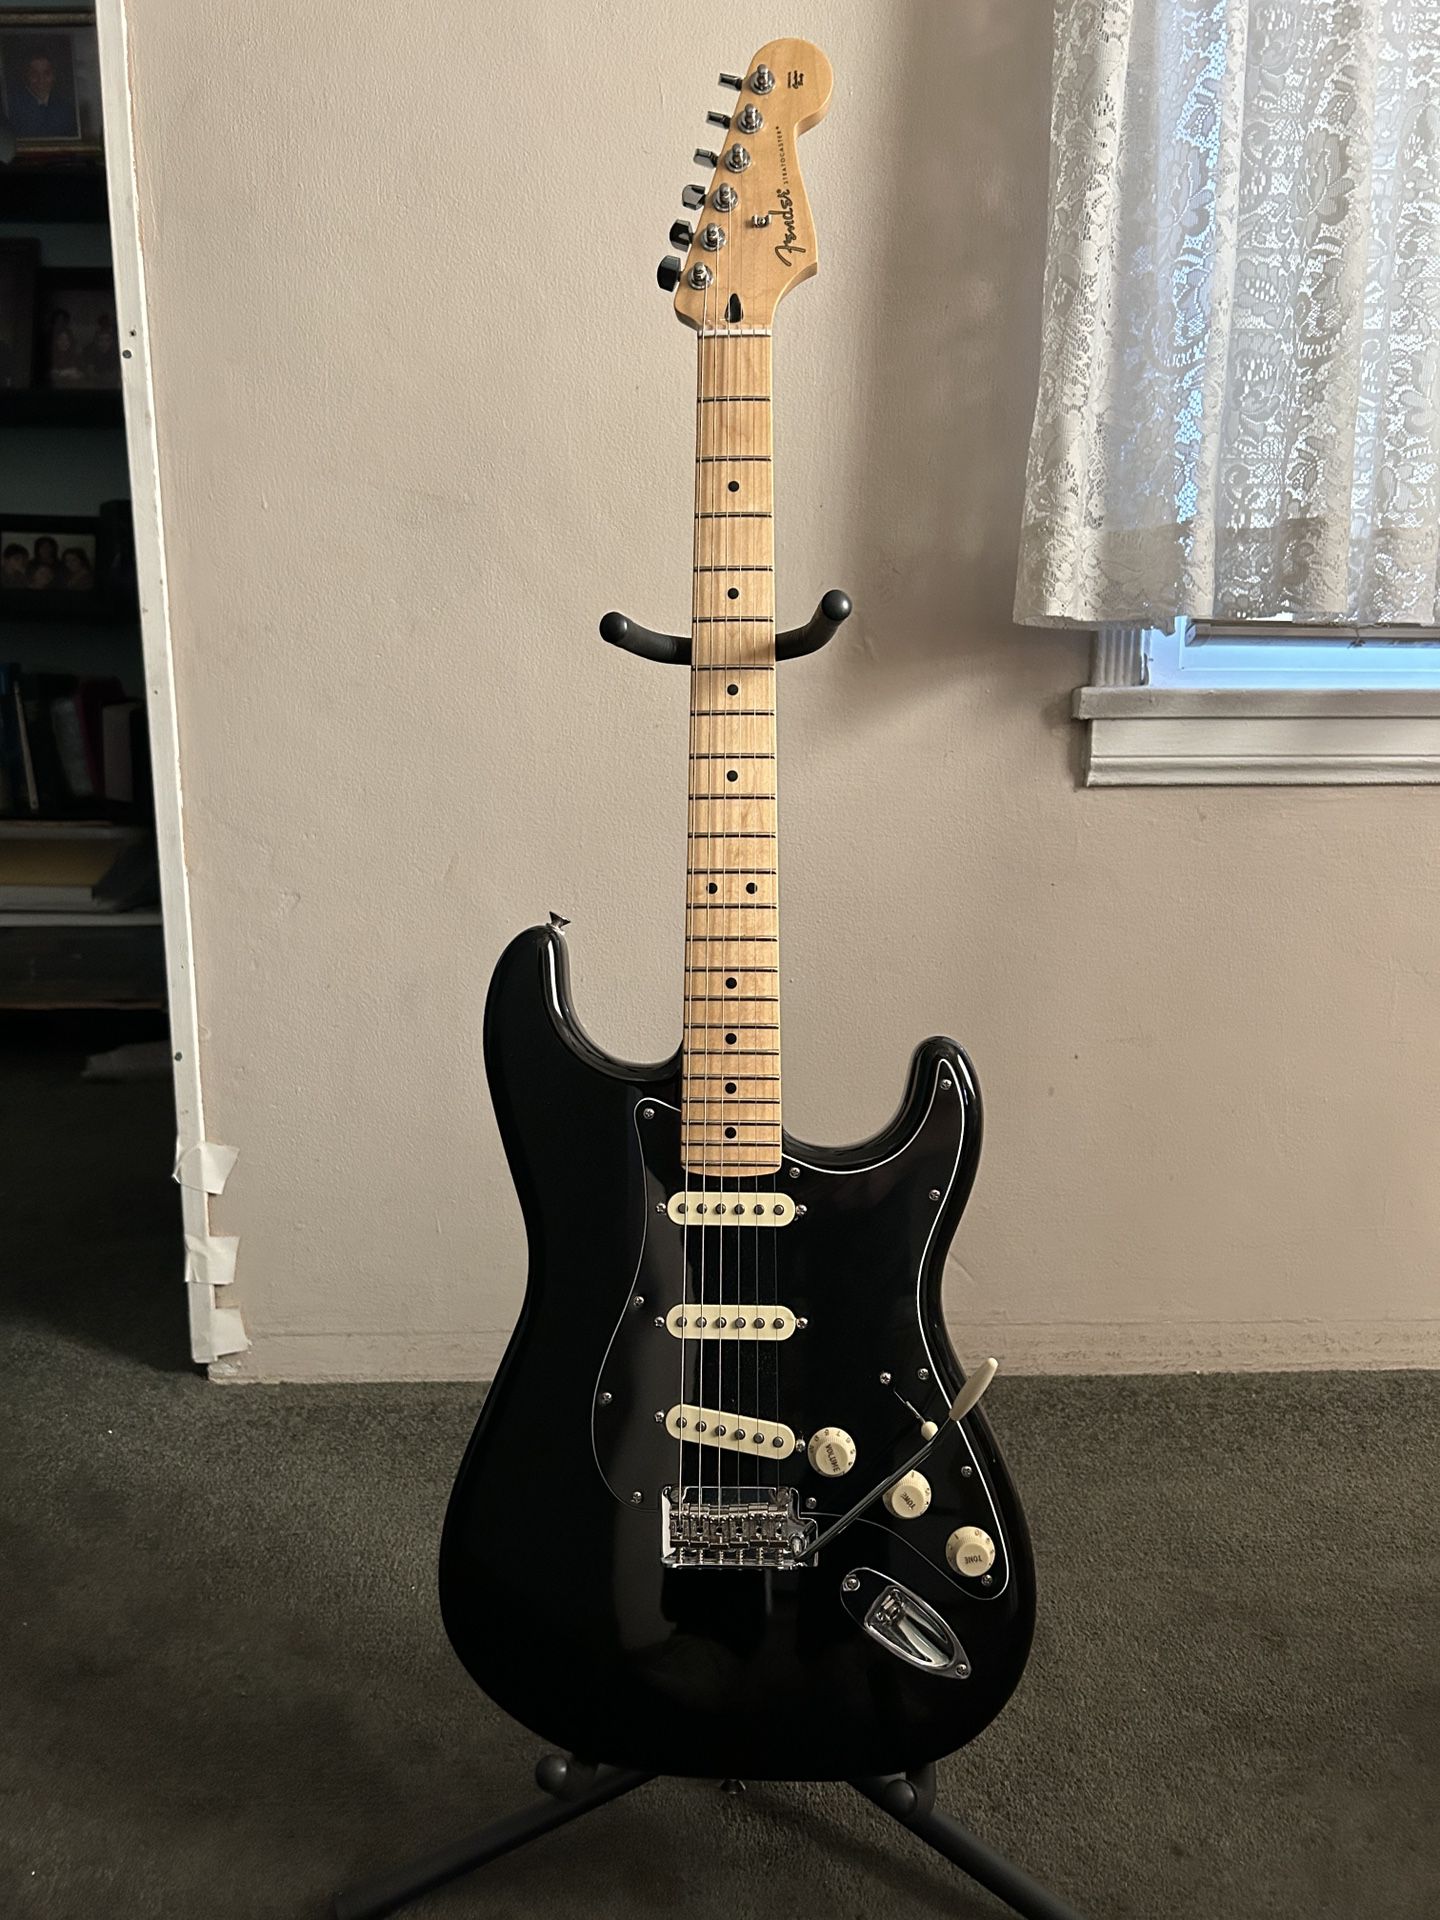 BRAND NEW Fender MIM Stratocaster 